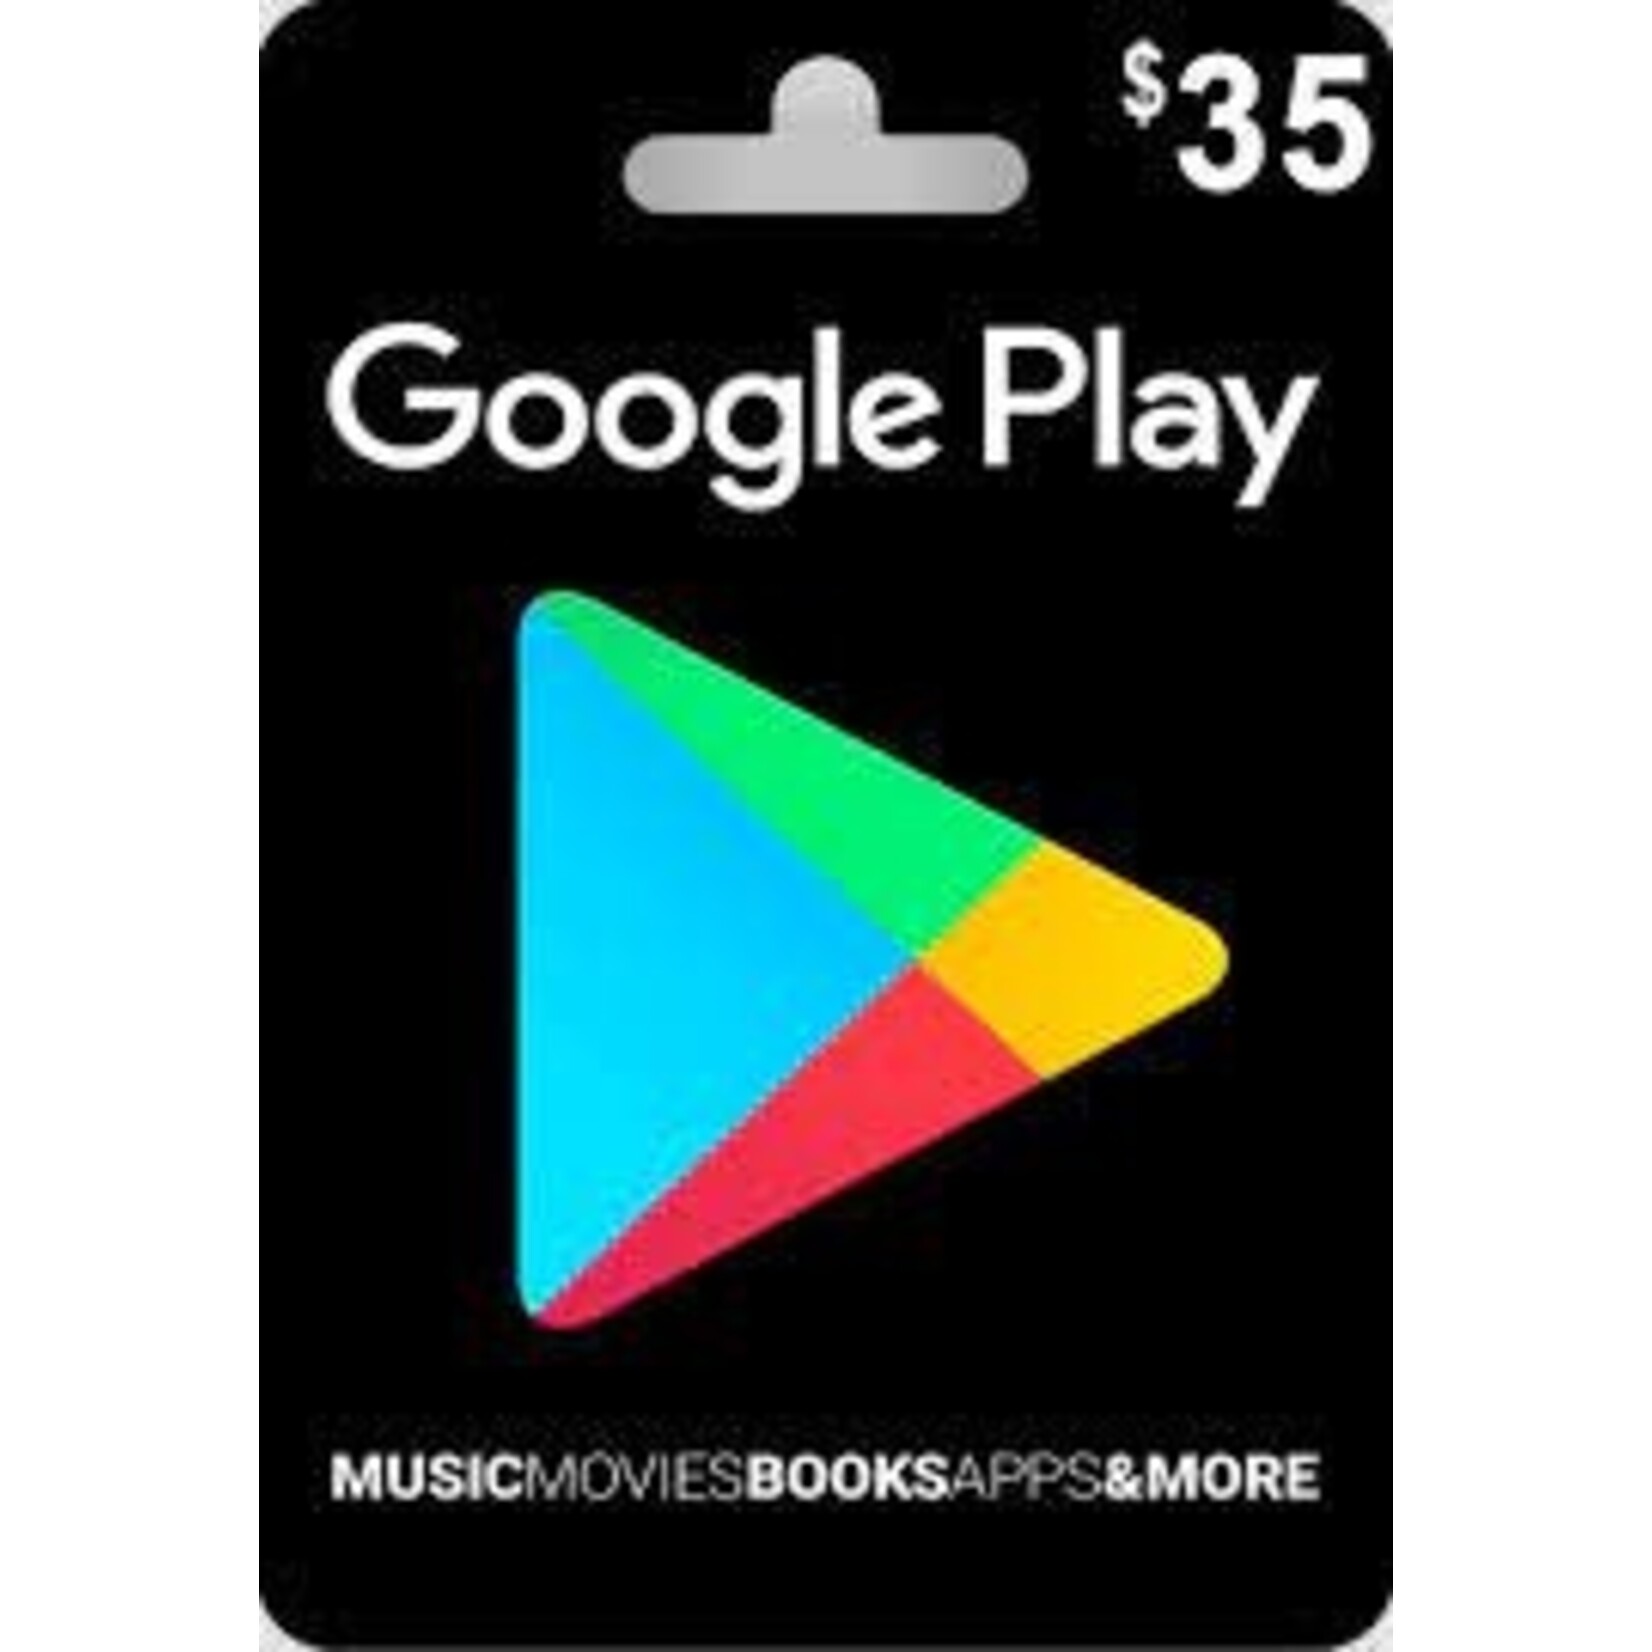 Google Google Play $35